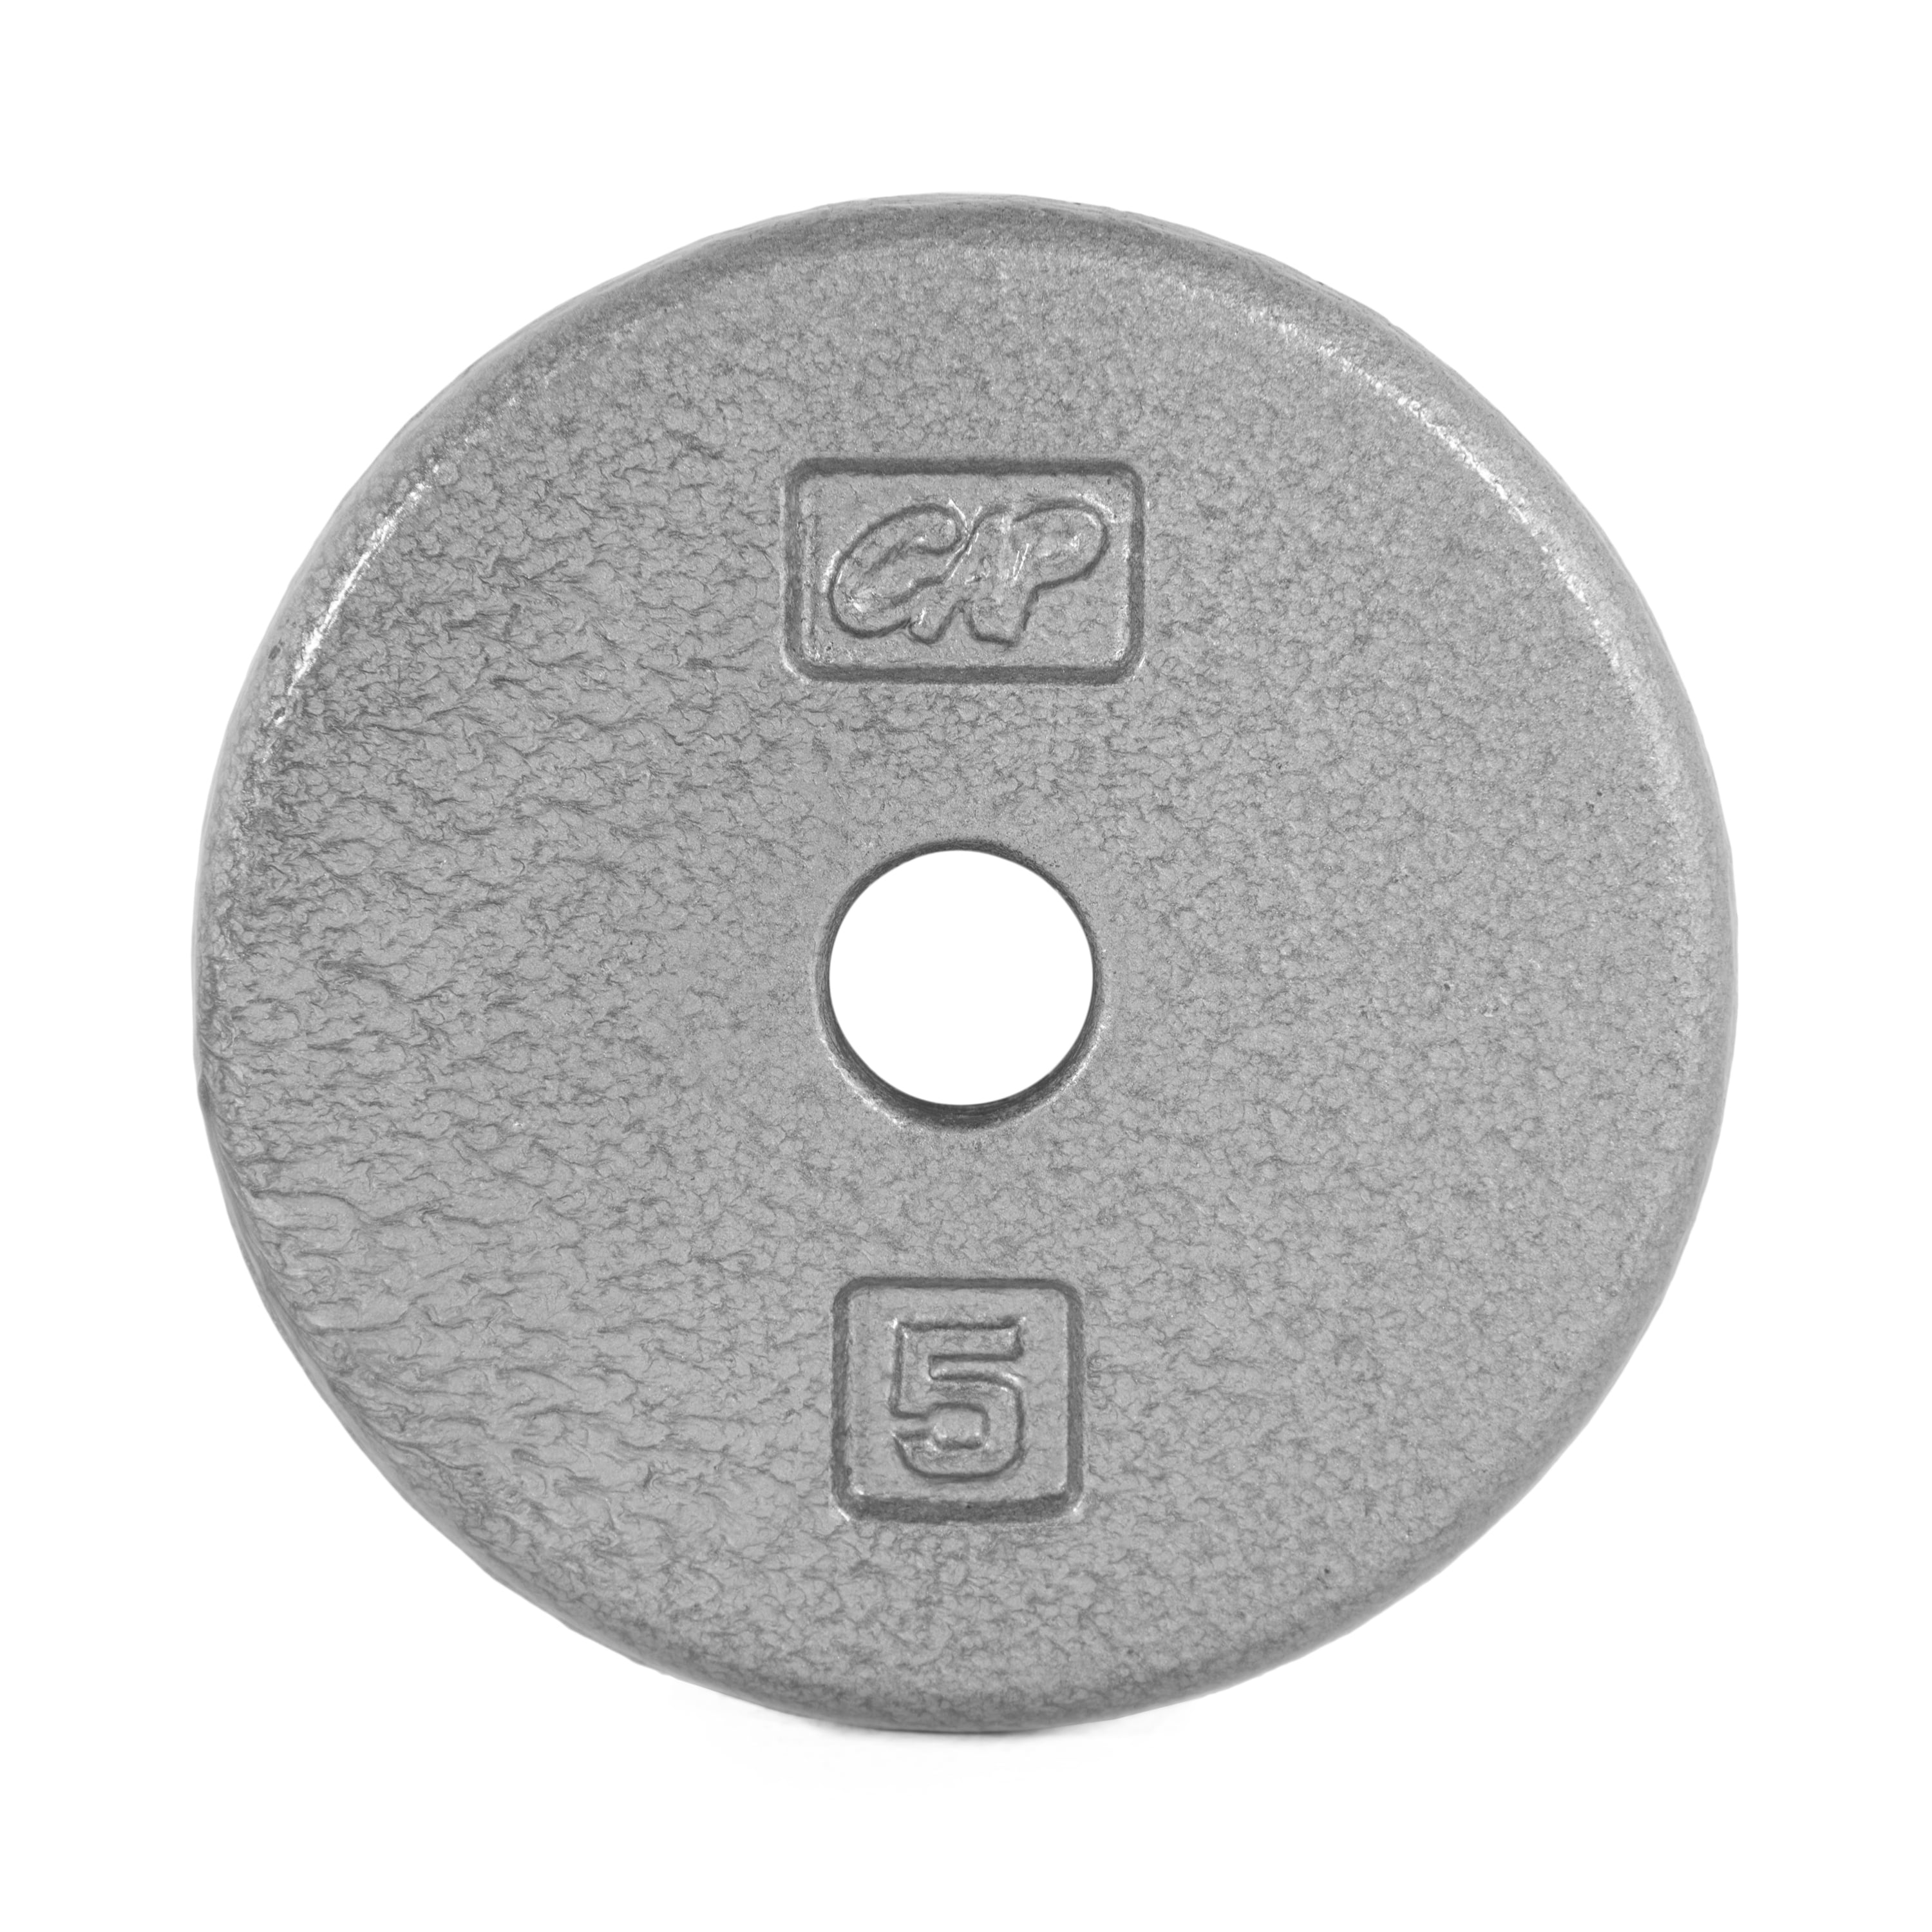 20 Lb Total CAP 5 LB Barbell Weight Plates 1’’ Standard Grip Weights Set of 4